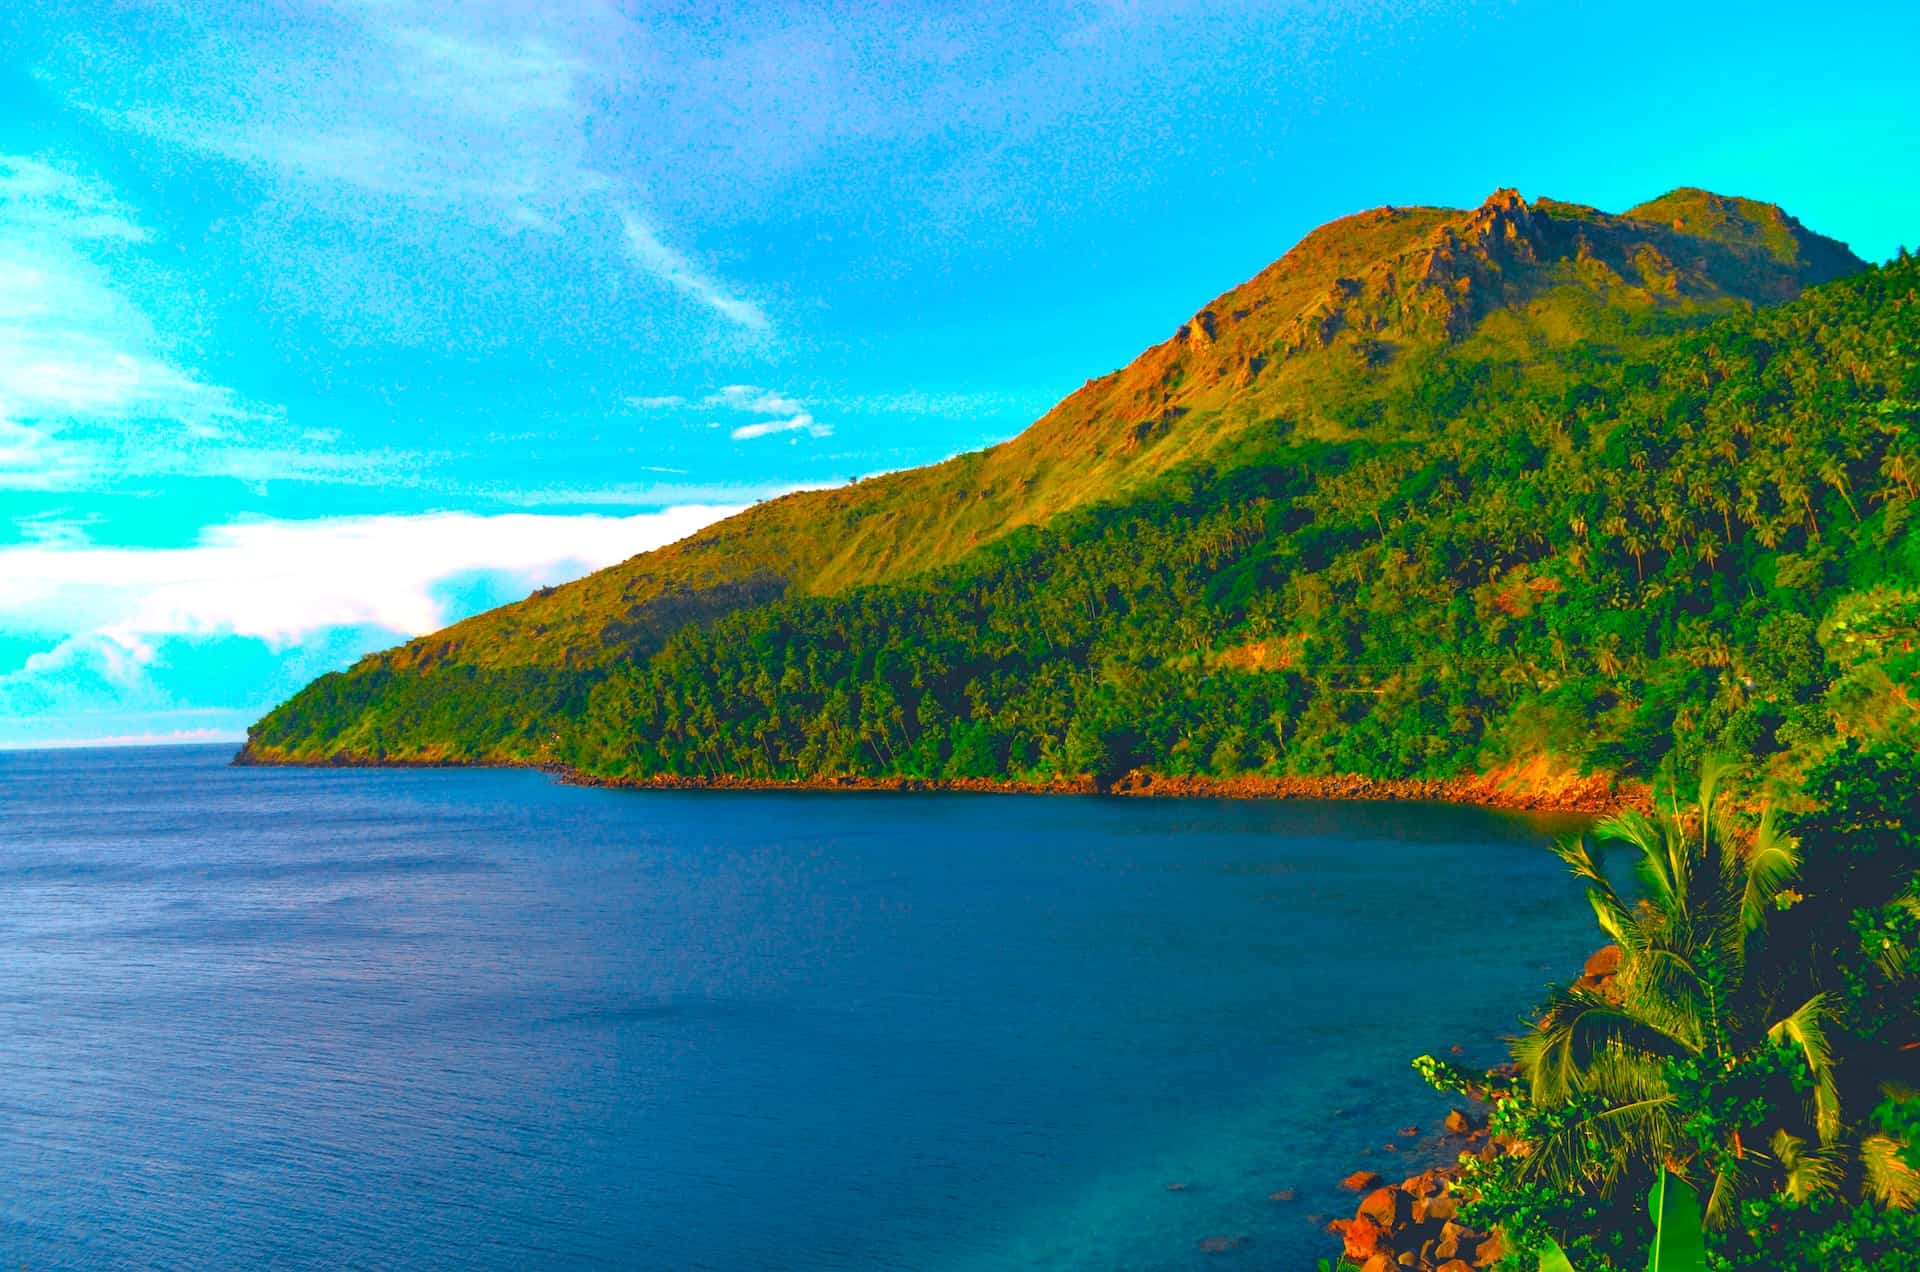 Mindoro Island